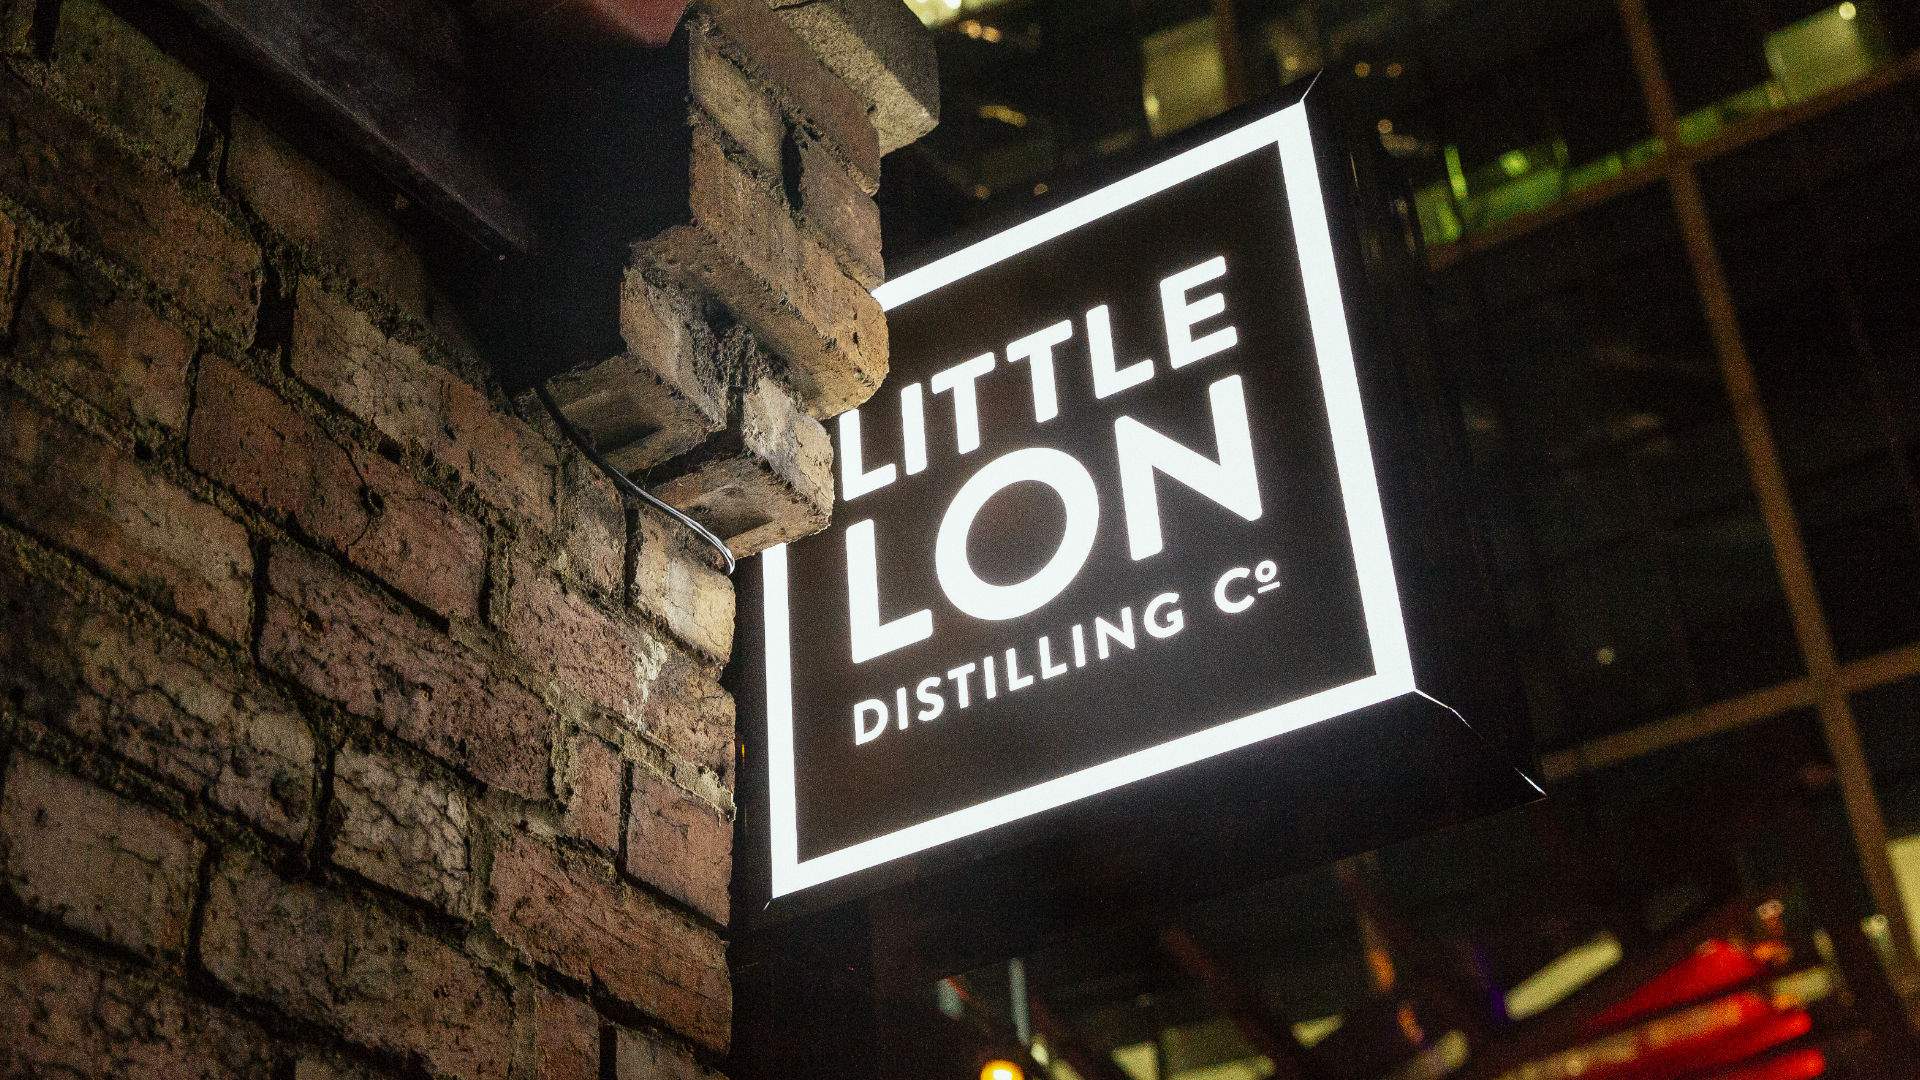 Little Lon Distilling Co.